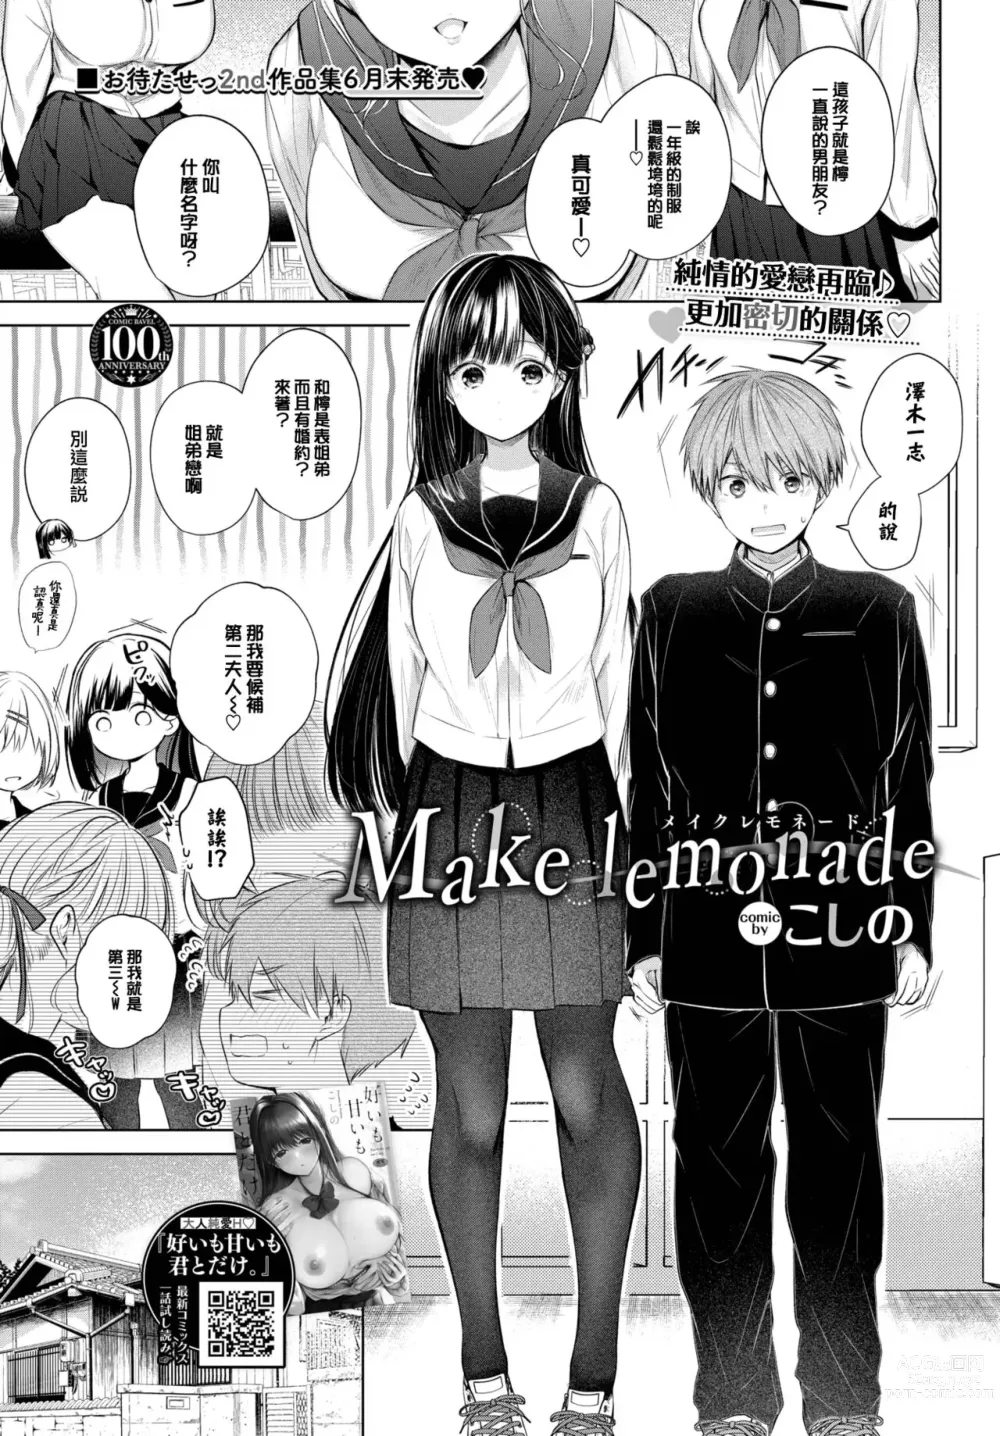 Page 2 of manga Make lemonade